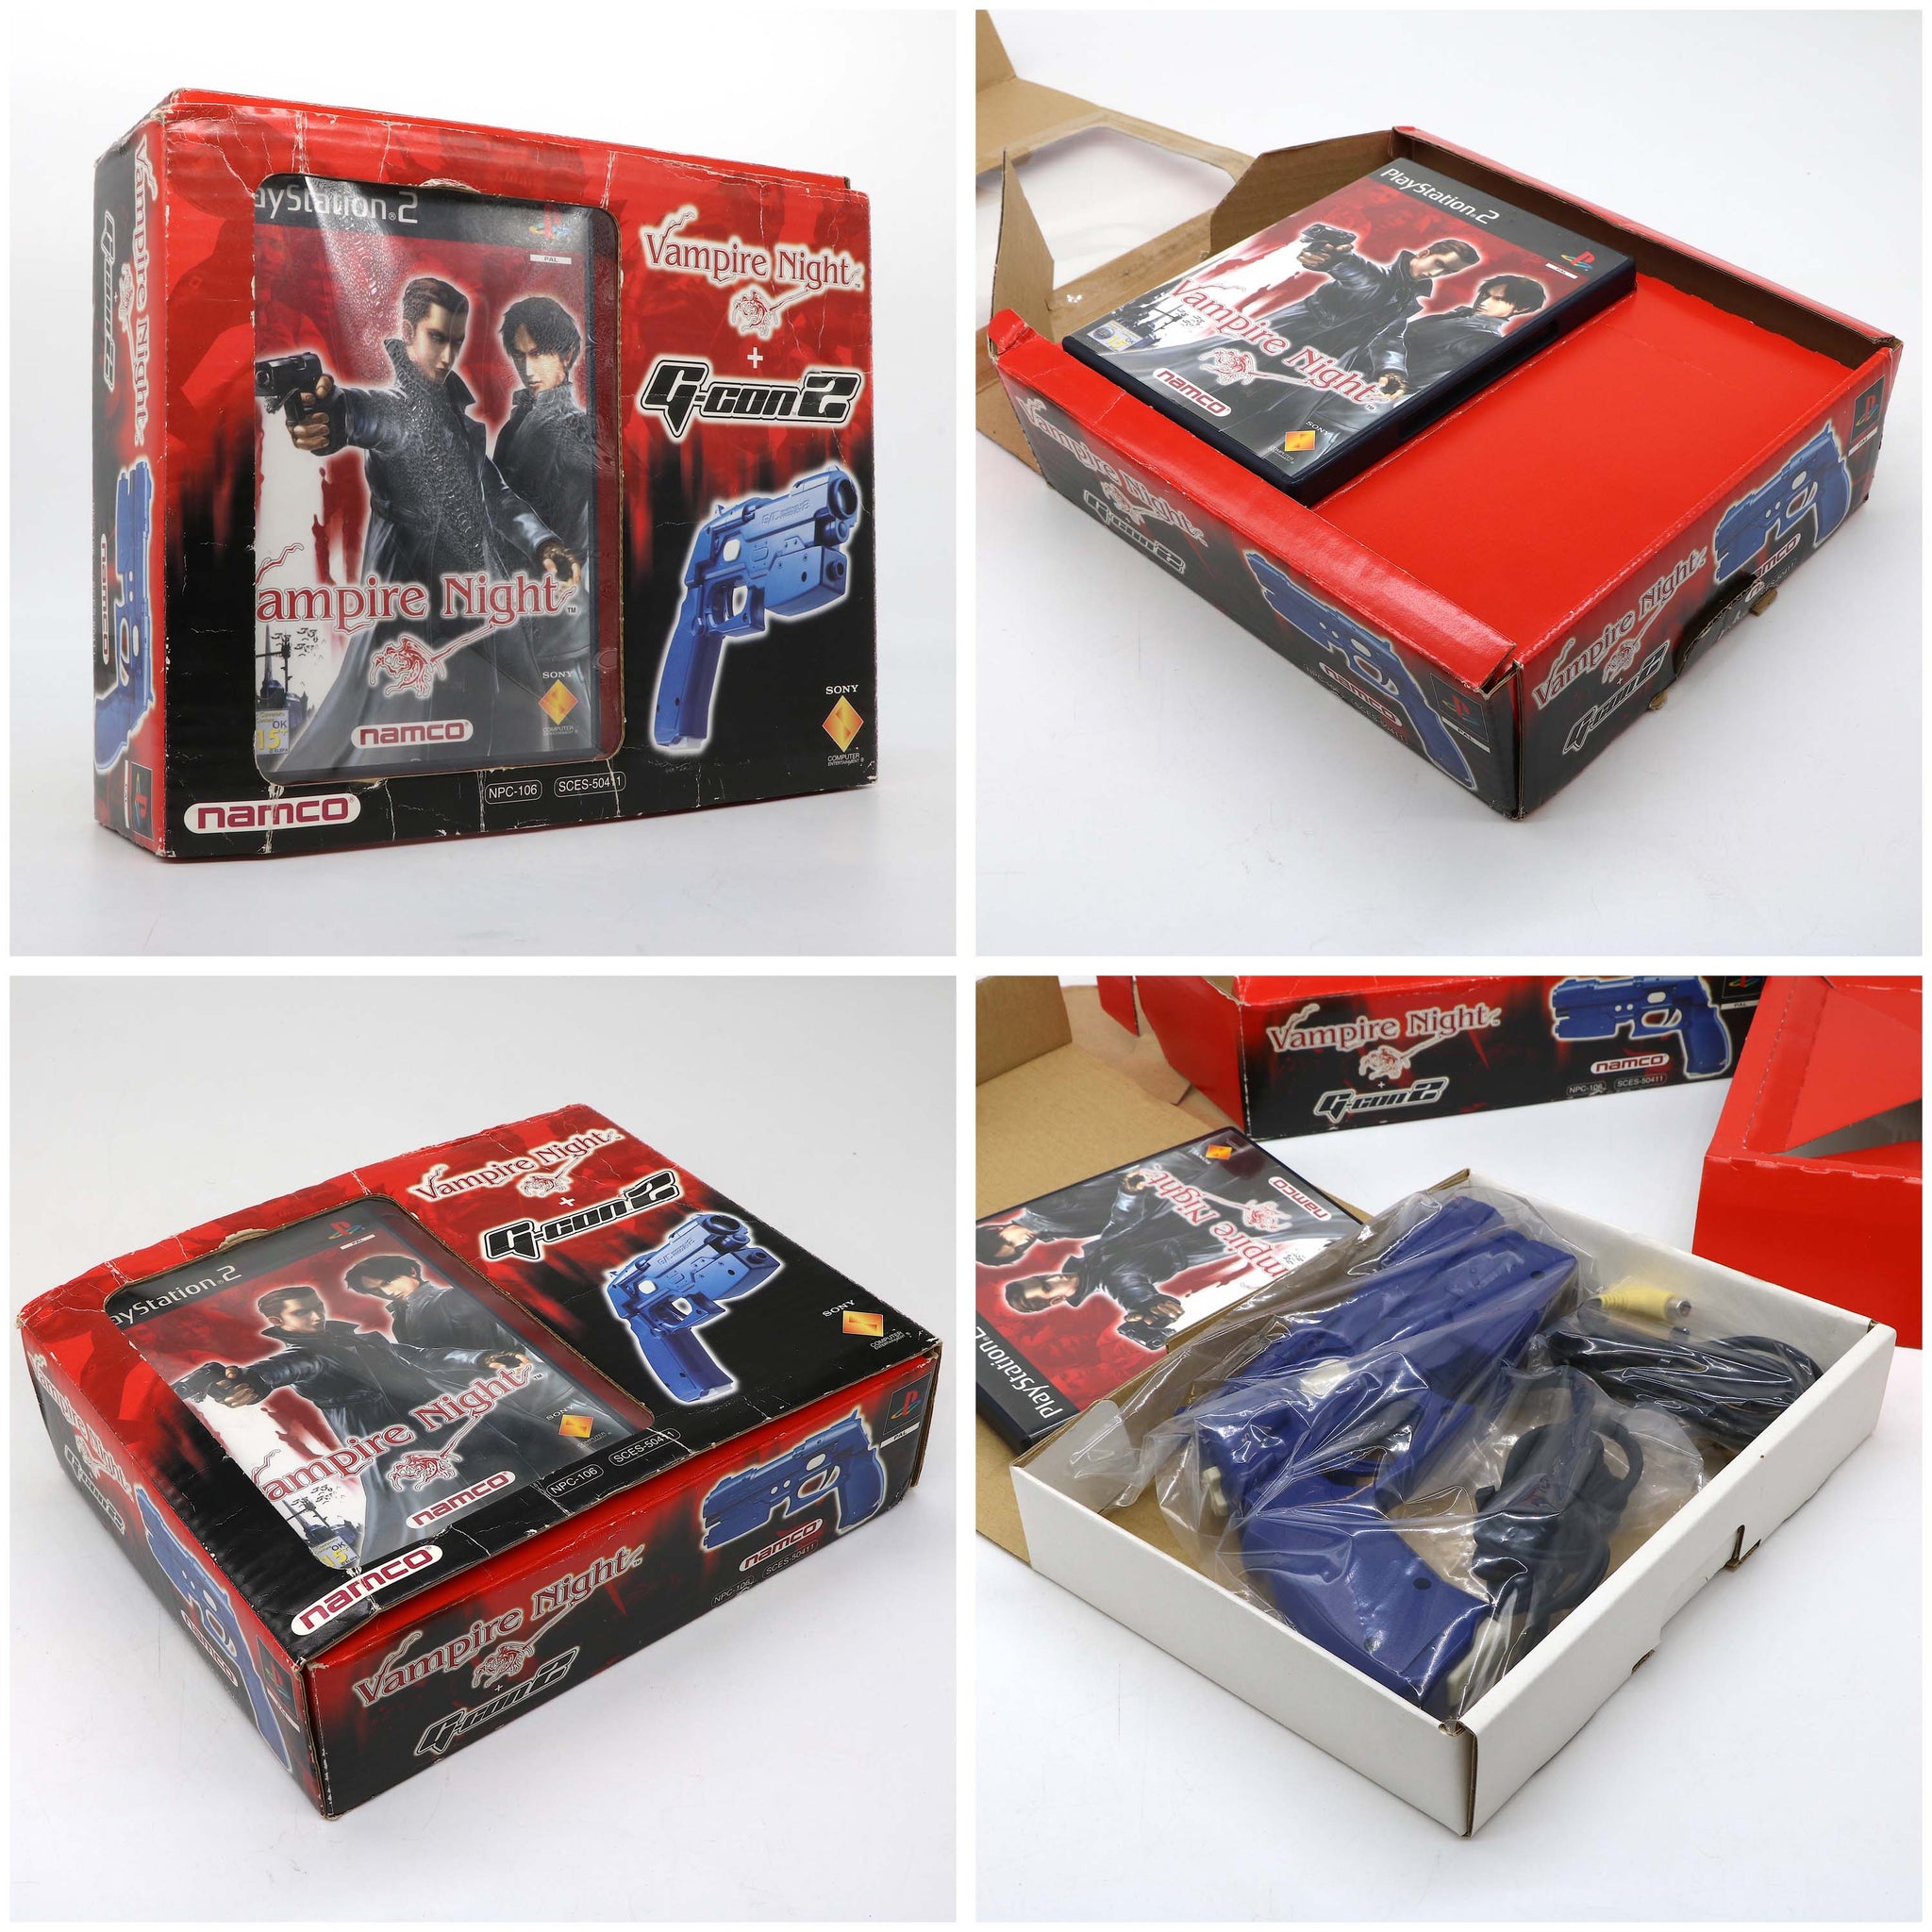 Vampire Night + GCon 2 Gun Bundle | Sony PS2 Game | (G-Con2)